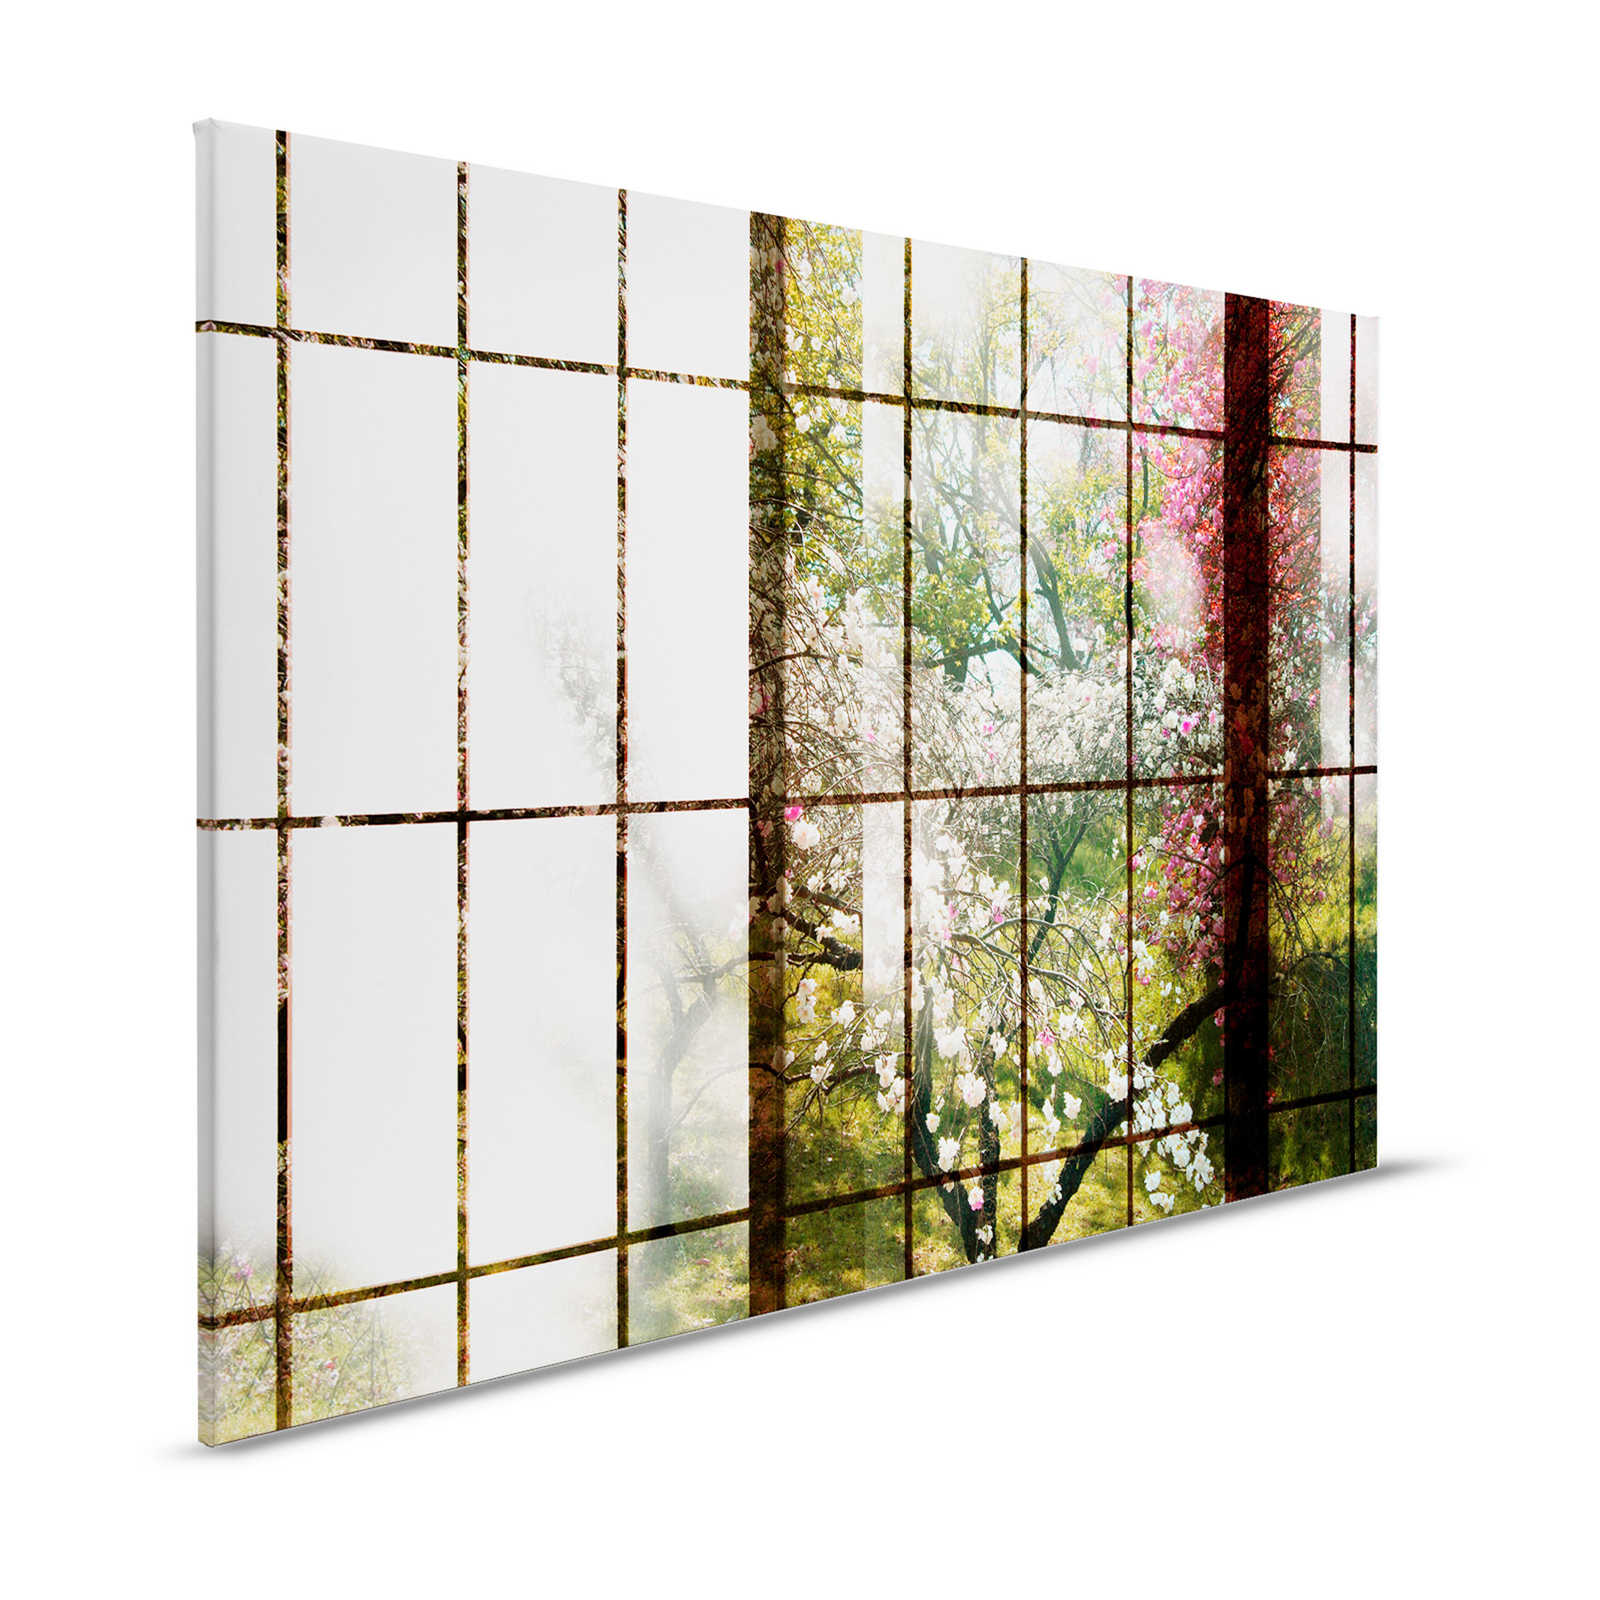 Orchard 1 - Leinwandbild, Fenster mit Garten Ausblick – 1,20 m x 0,80 m
